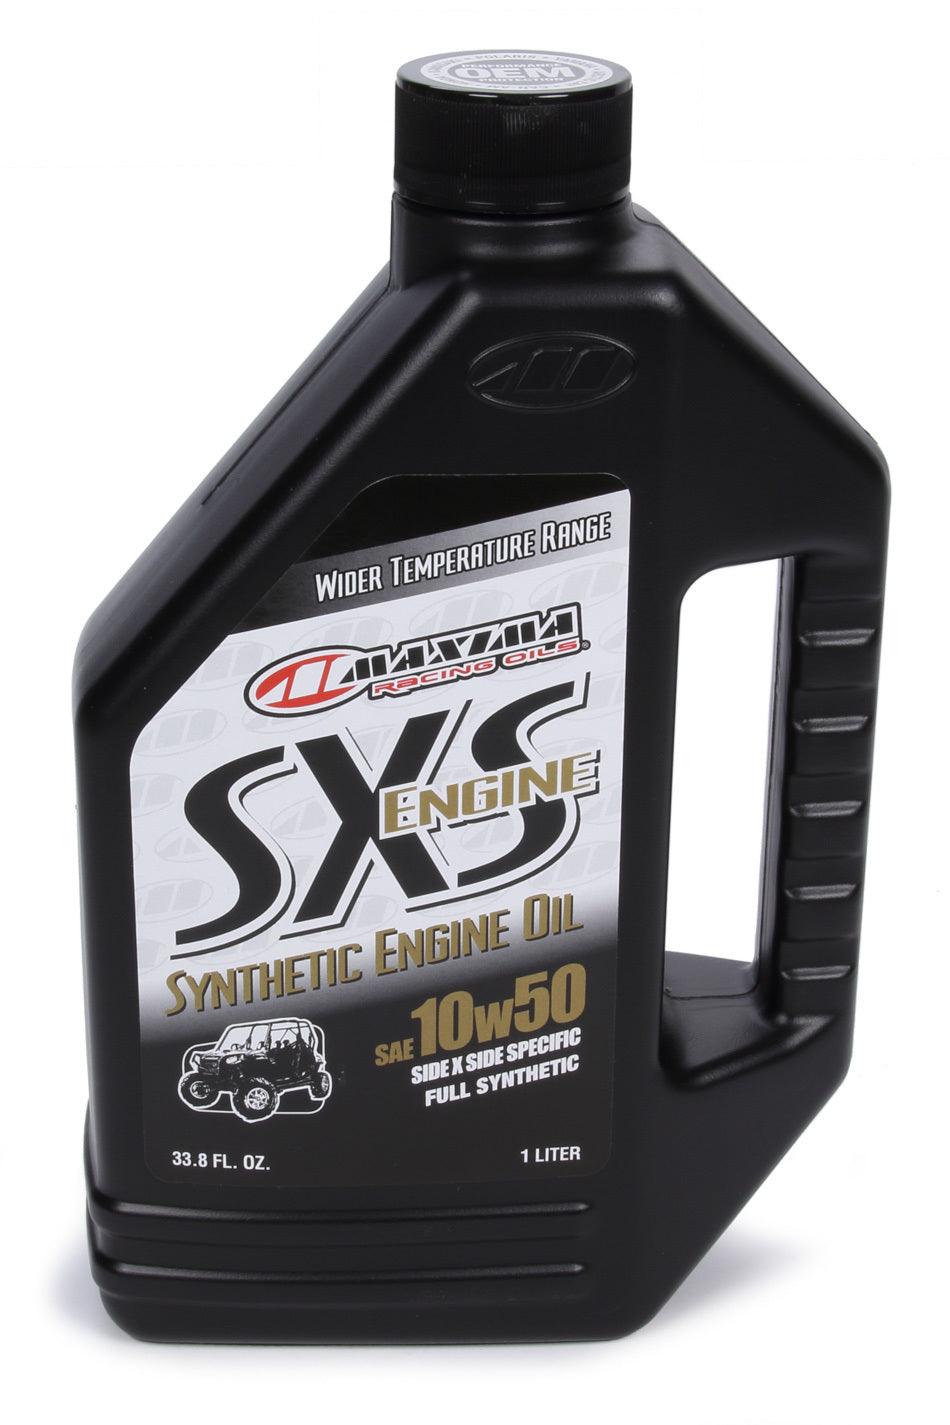 SXS Engine Full Syntheti c 10w50 1 Liter - Burlile Performance Products